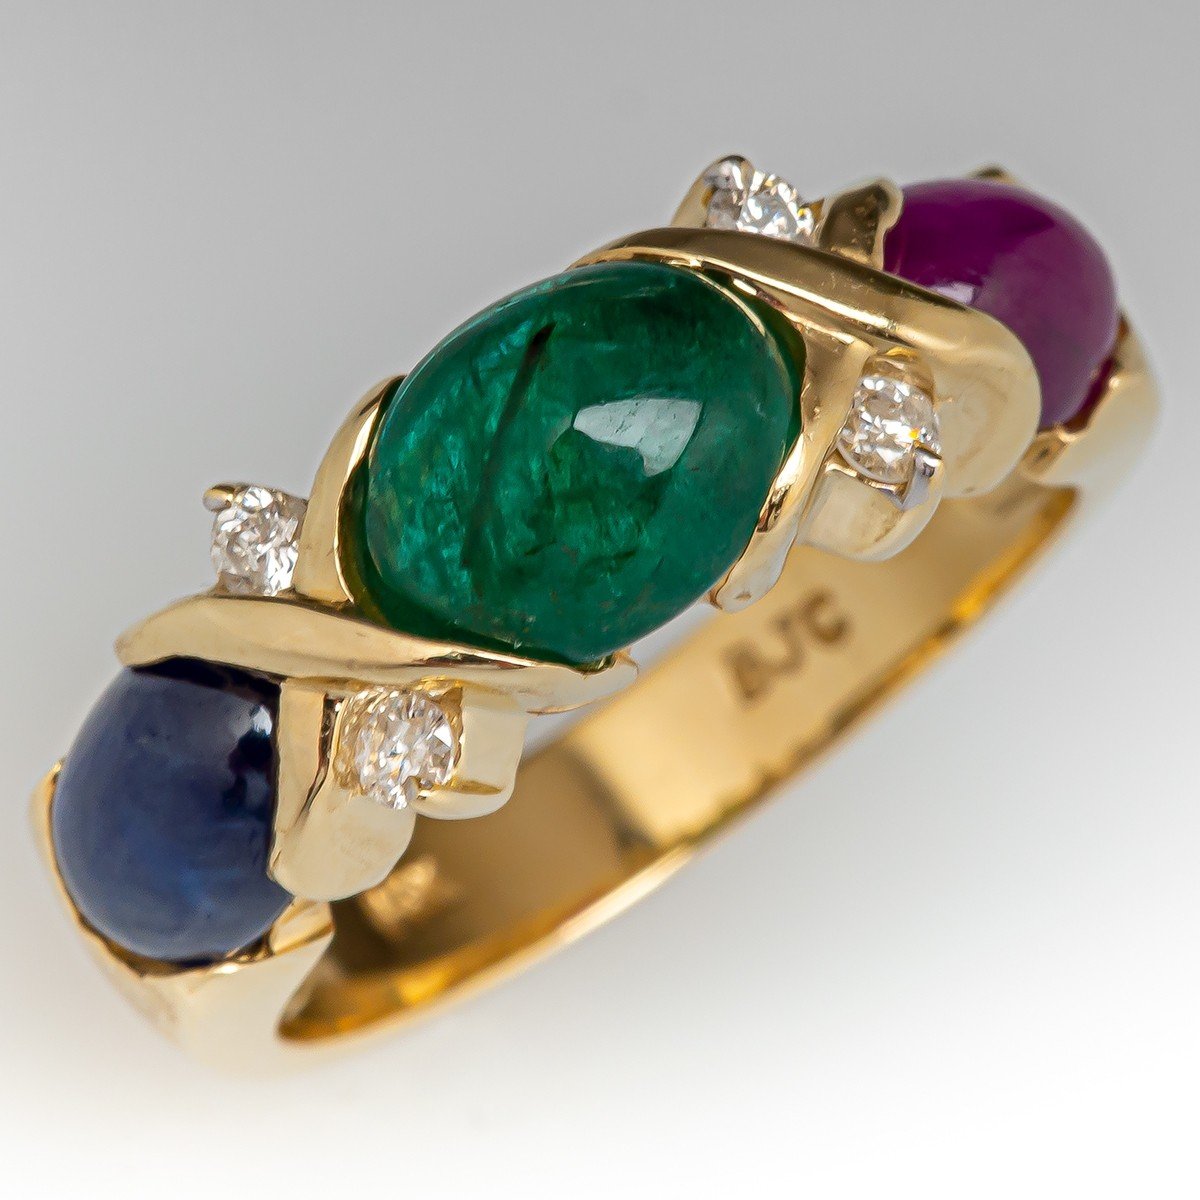 Buy Gorgeous Uncut Polki Ruby and Emerald Ring Online: Attrangi